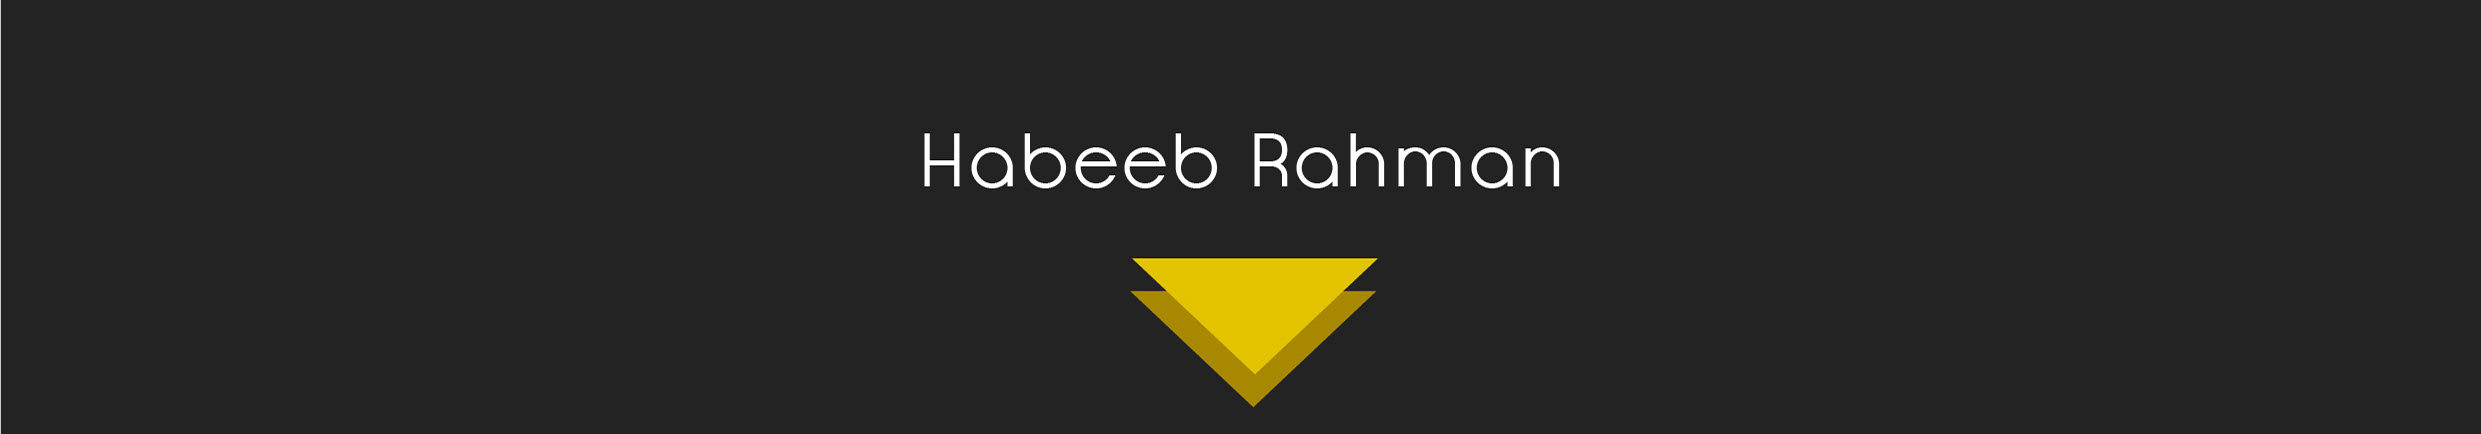 Habeeb Rahman's profile banner